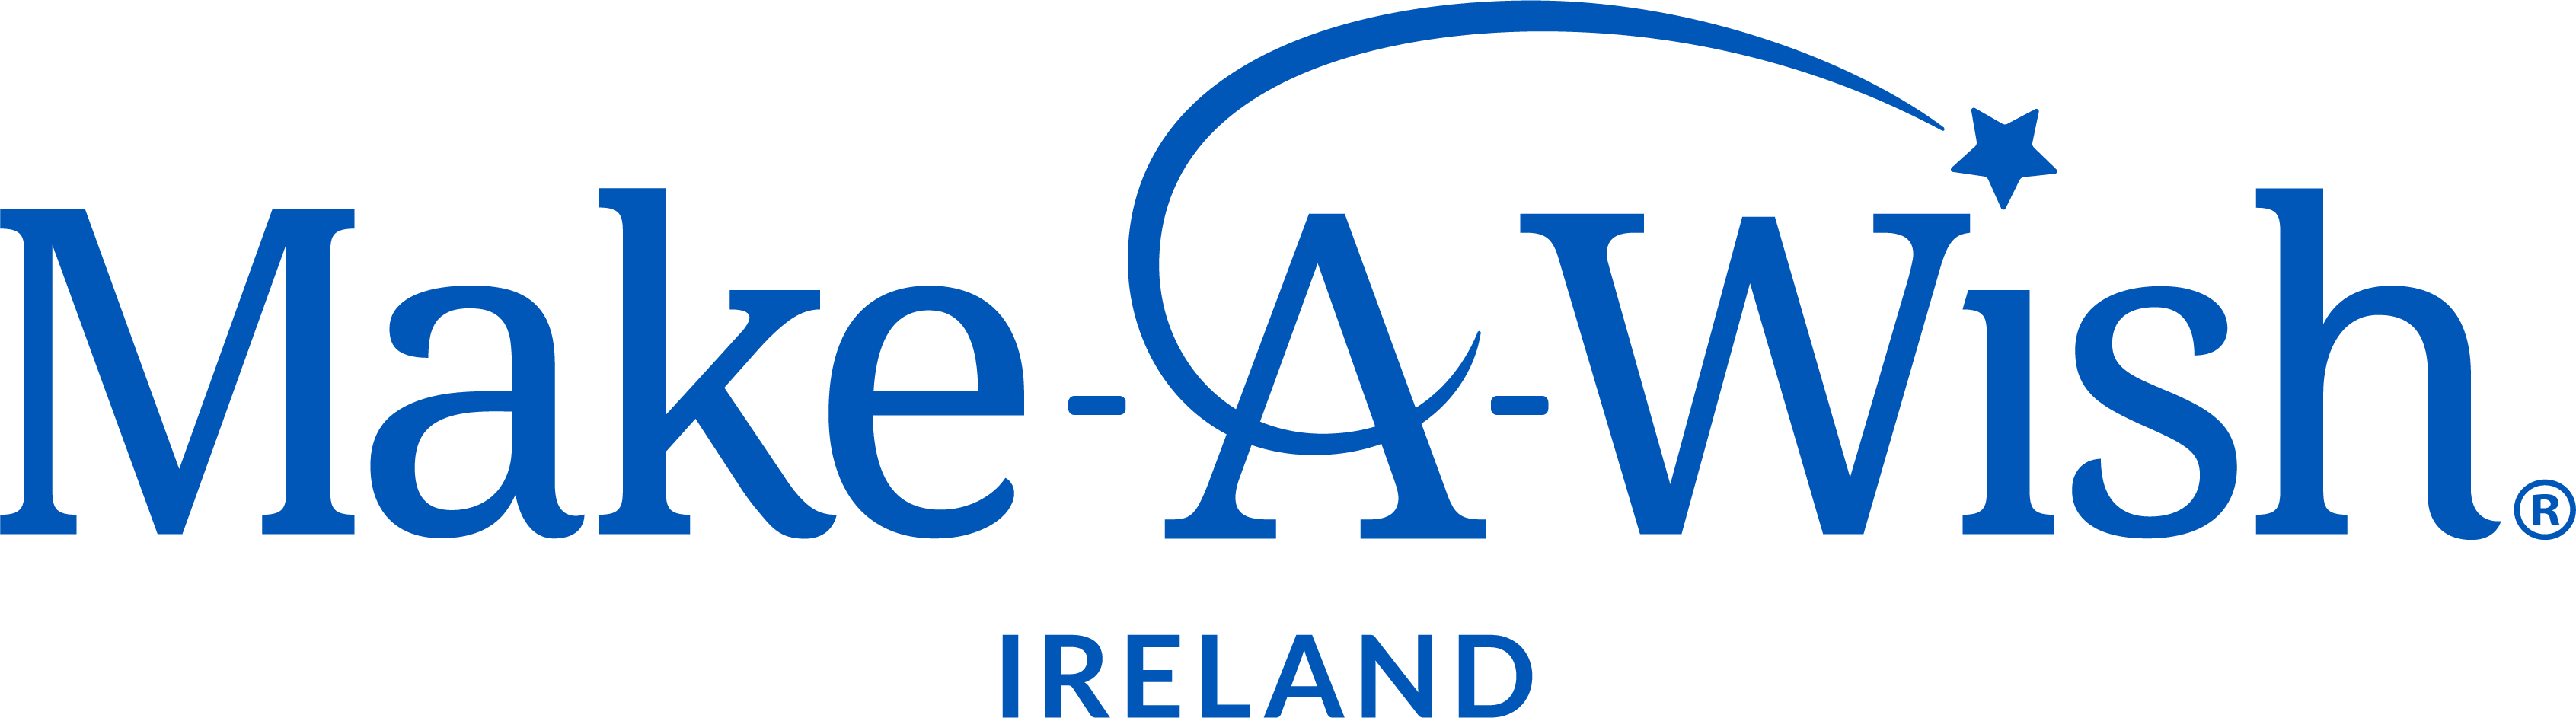 Make-A-Wish Ireland logo